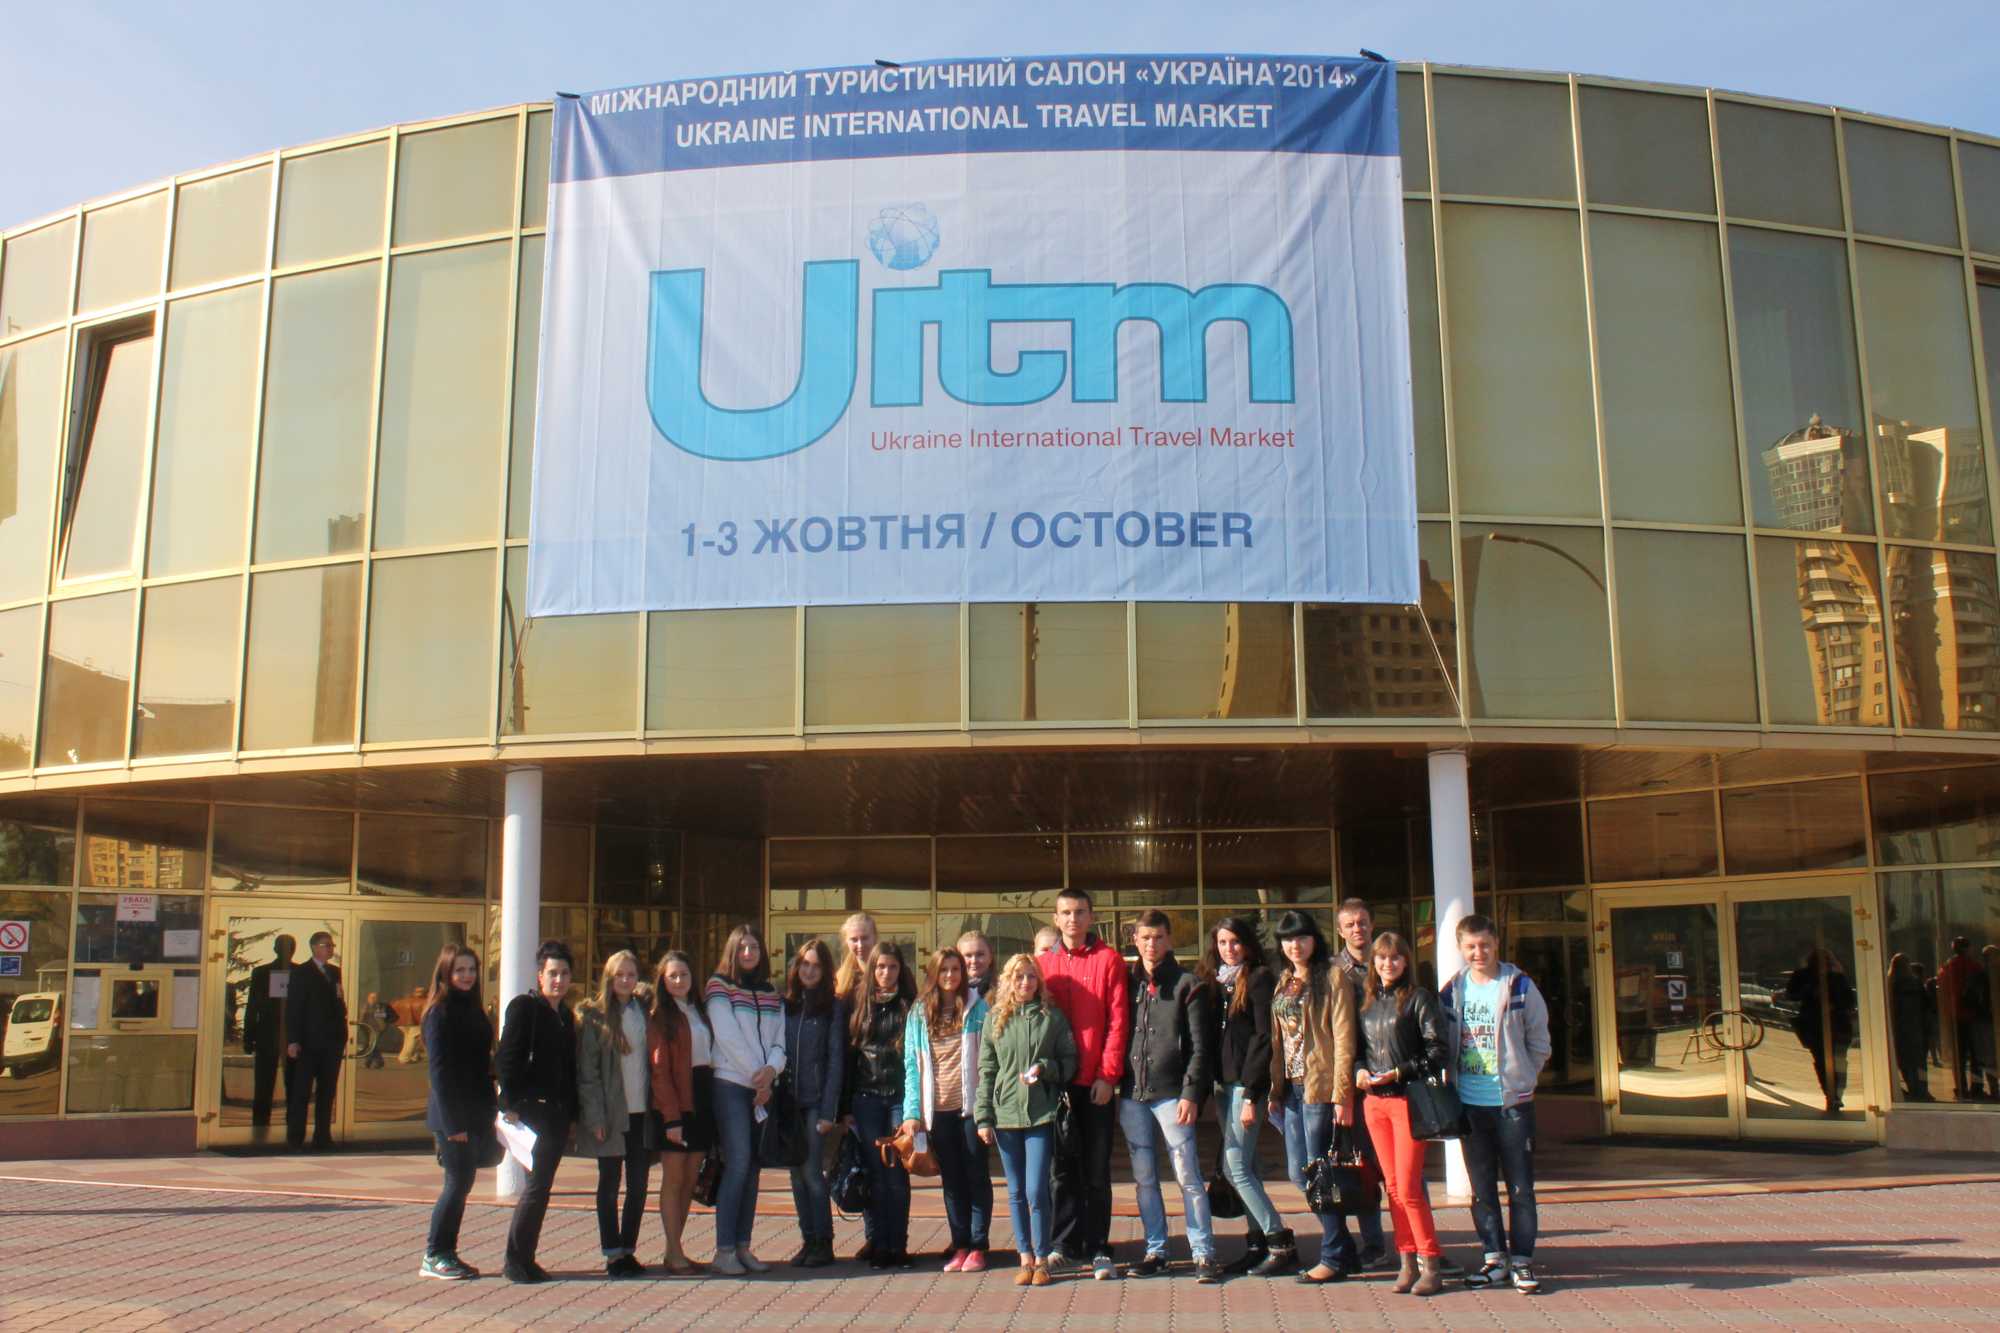 «Україна’2014» / UITM – Ukraine International Travel Market»